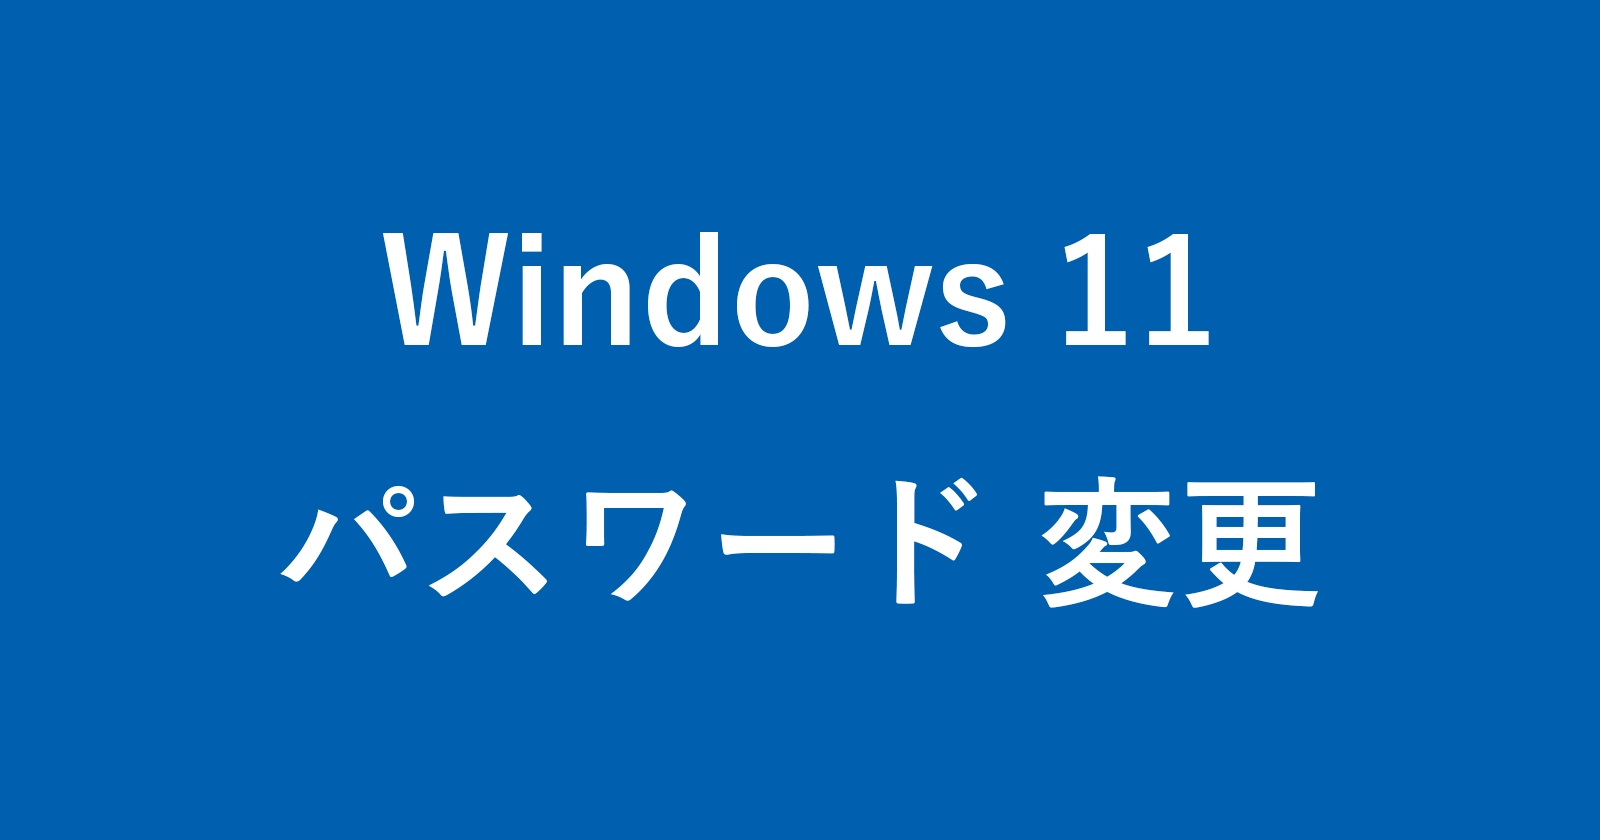 windows 11 change password